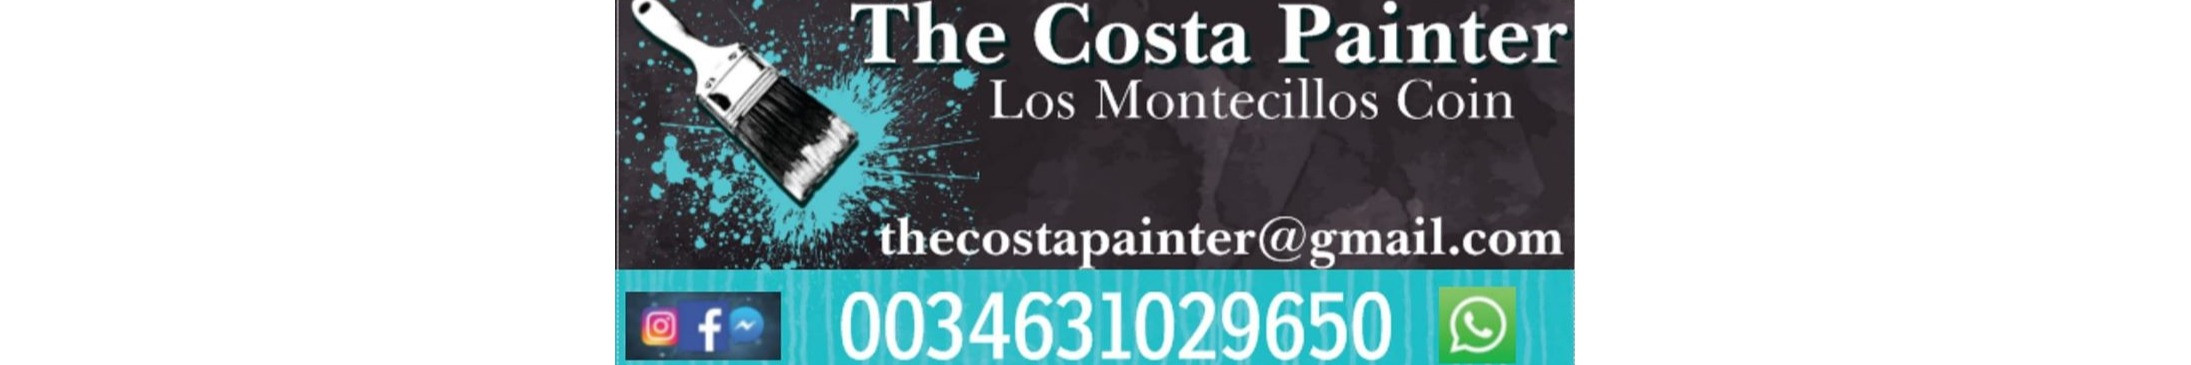 The Costa Painter